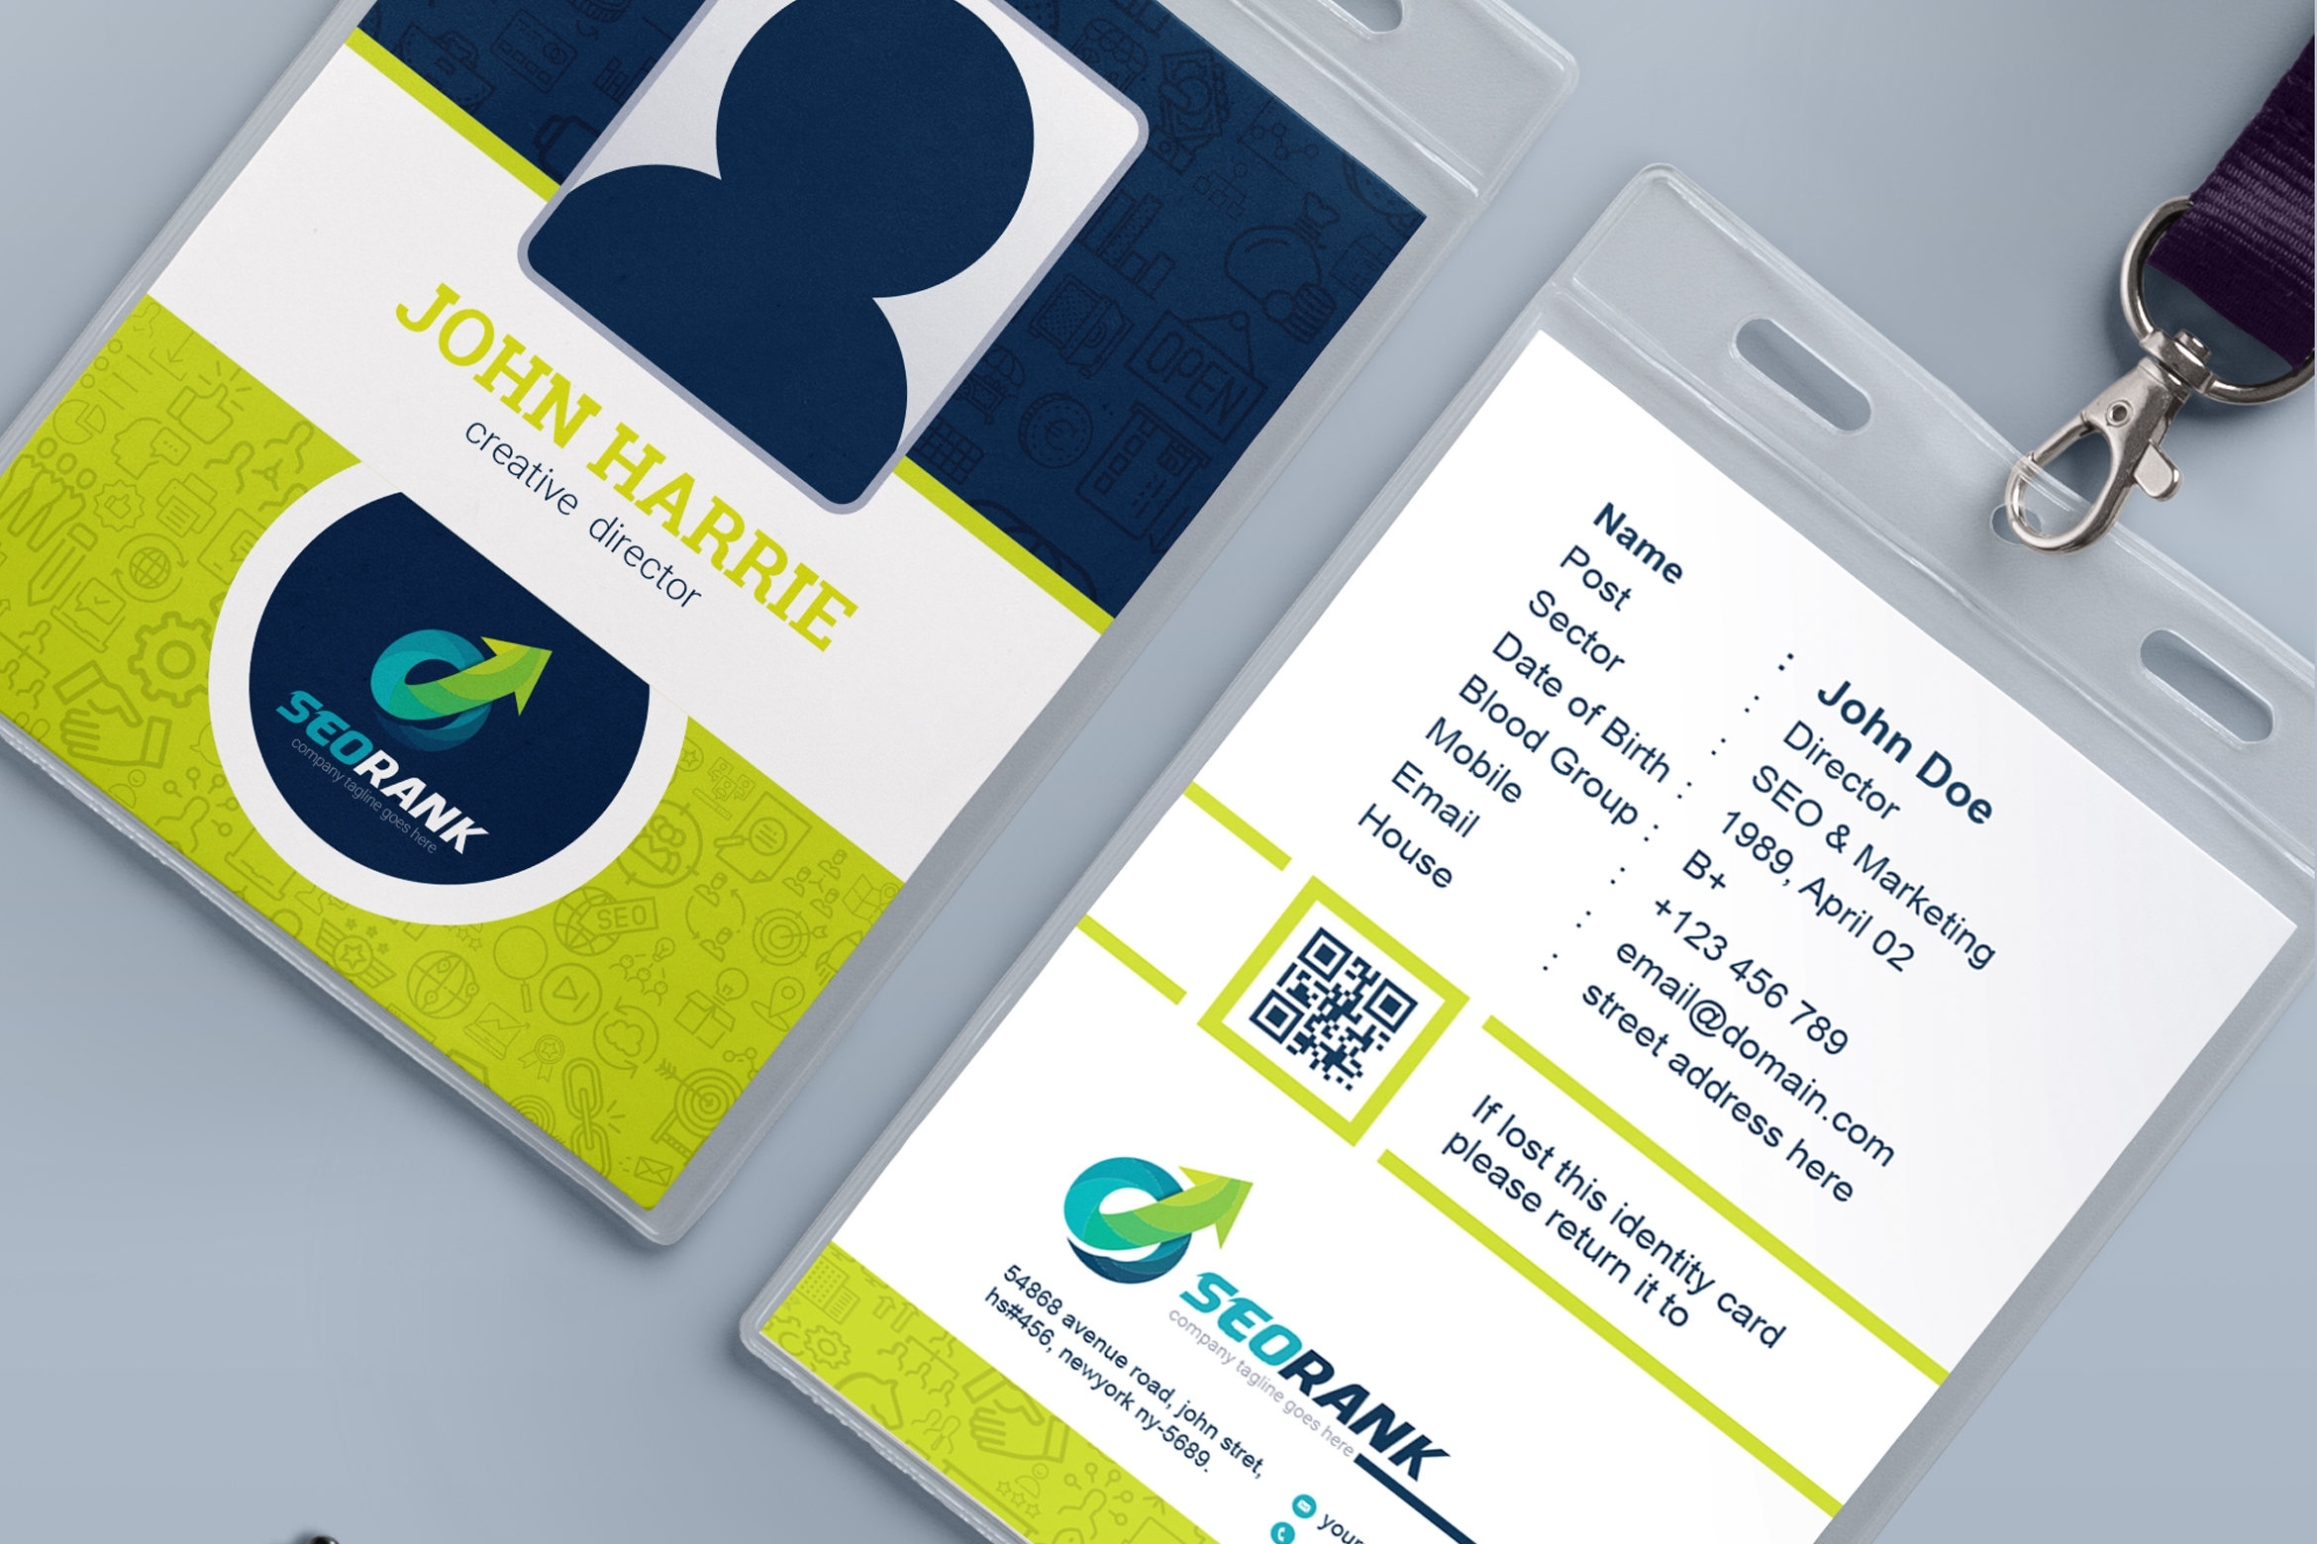 Company / Employee Id Badge Plastic Pvc Custom Photo Id | Etsy In Pvc Id Card Template